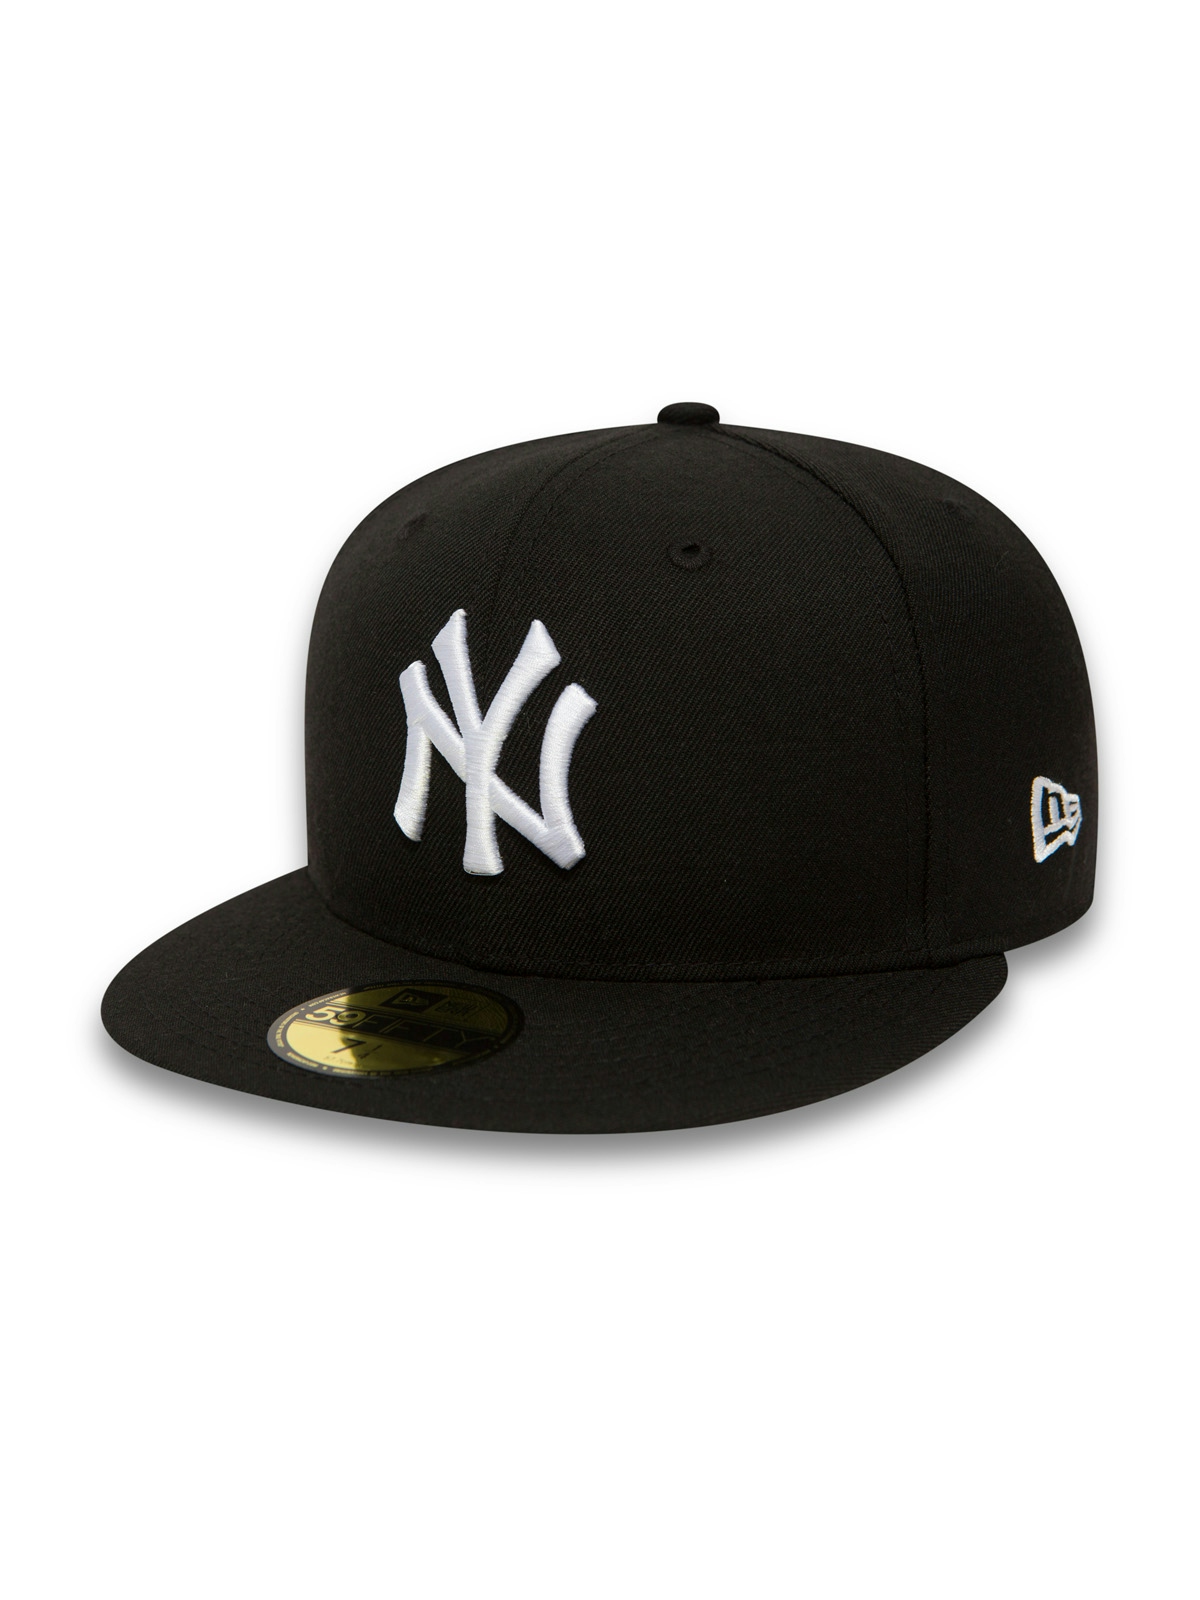 New Era Mlb Basic New York Yankees 59fifty Caps Black/White 1